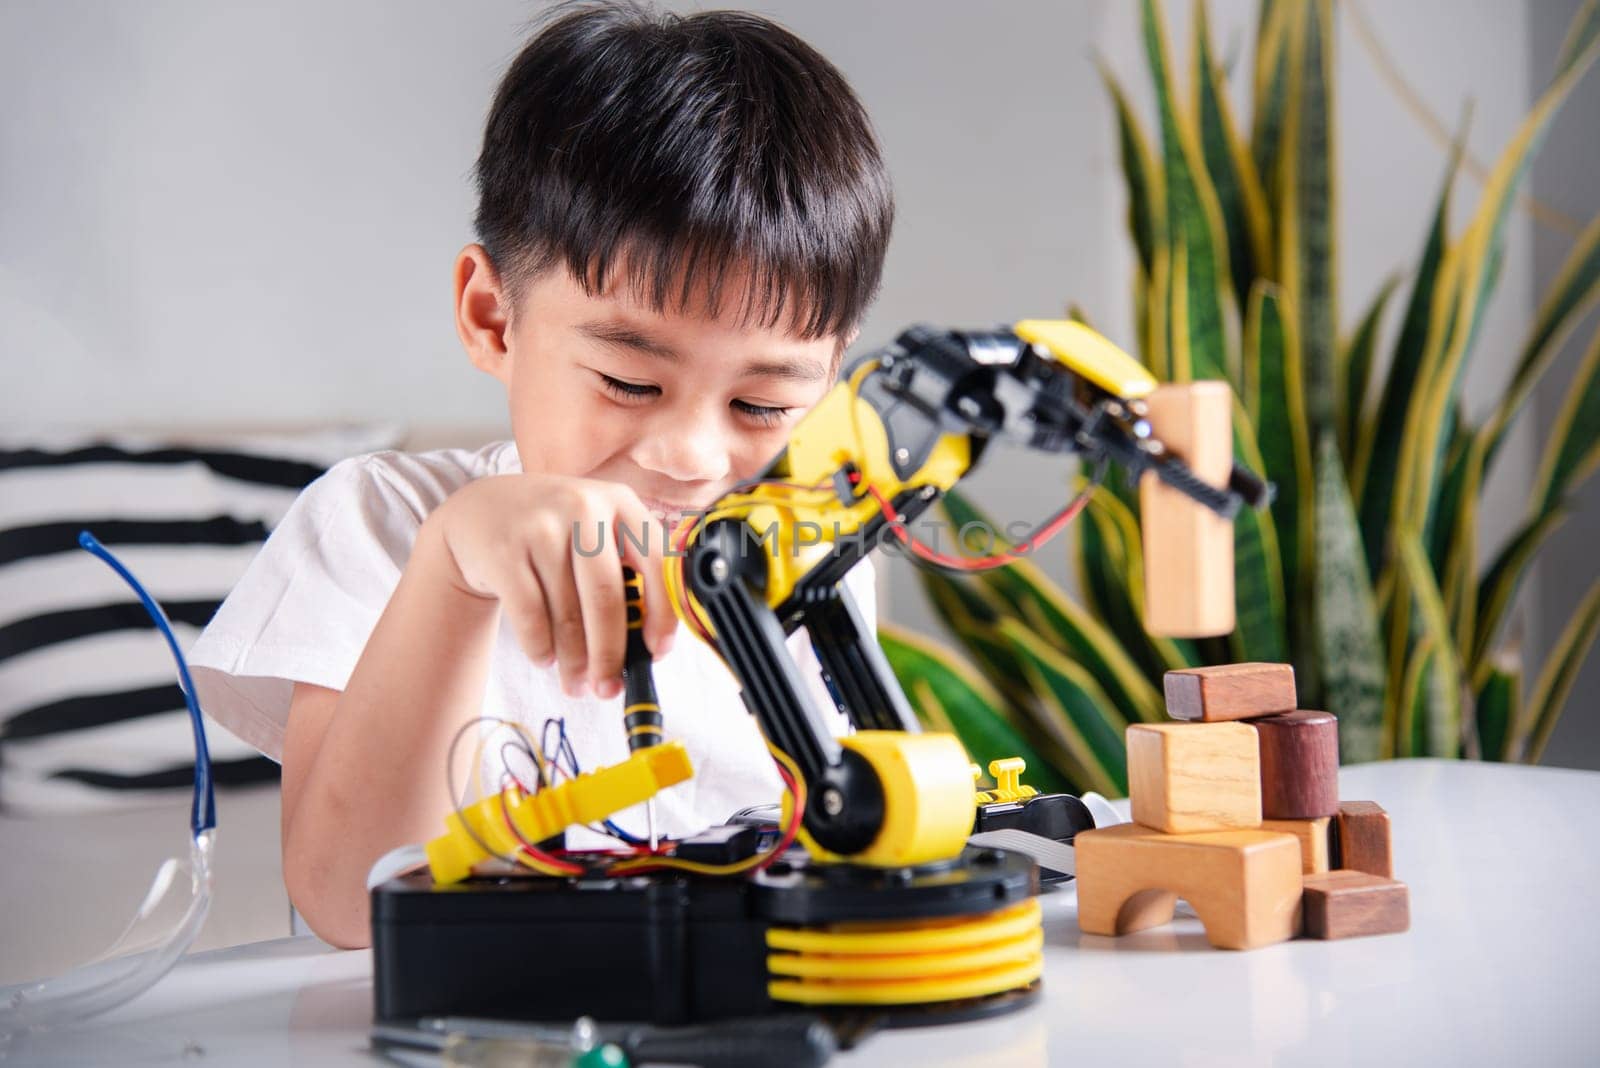 Happy Asian little kid boy using screwdriver to fixes screws robotic machine arm in home workshop by Sorapop